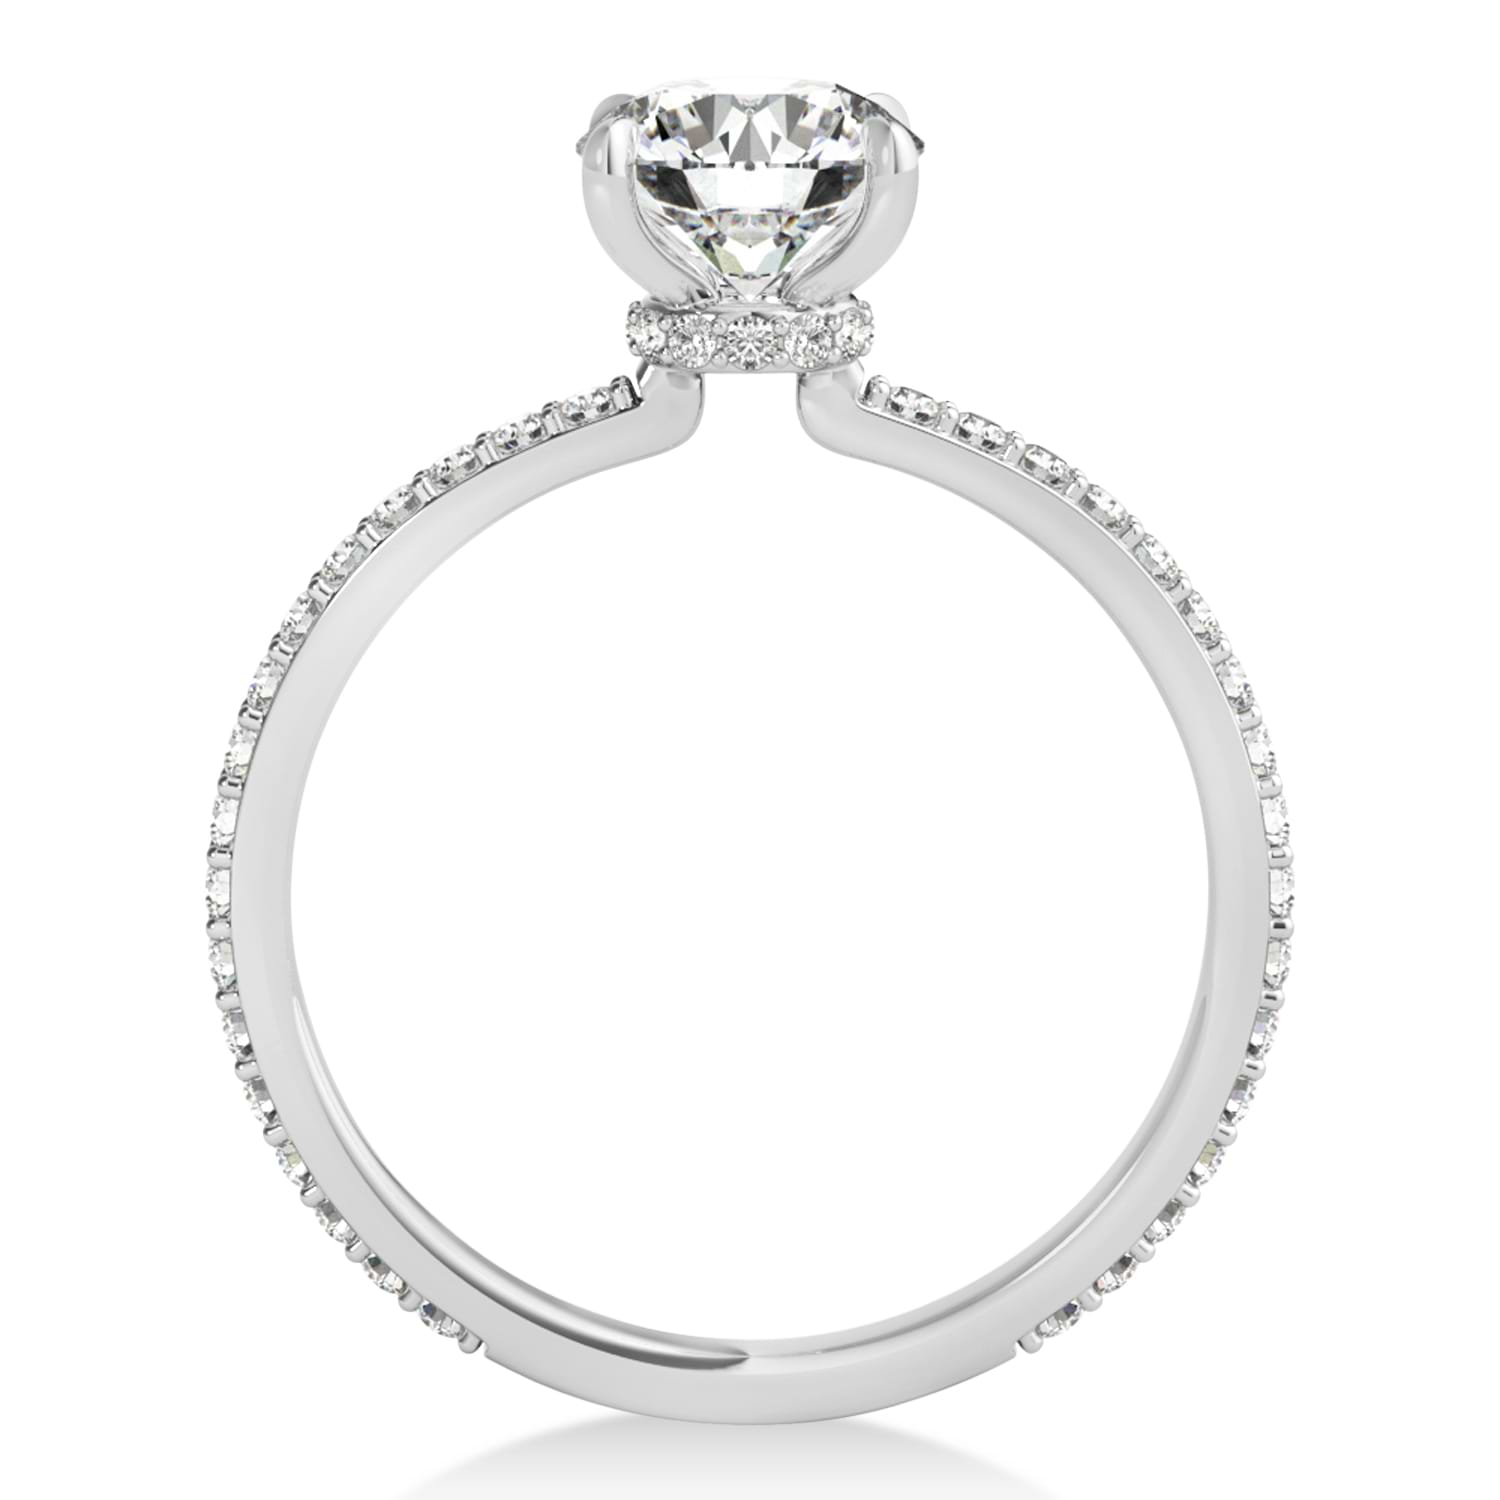 Oval Diamond Hidden Halo Engagement Ring 14k White Gold (1.00ct)